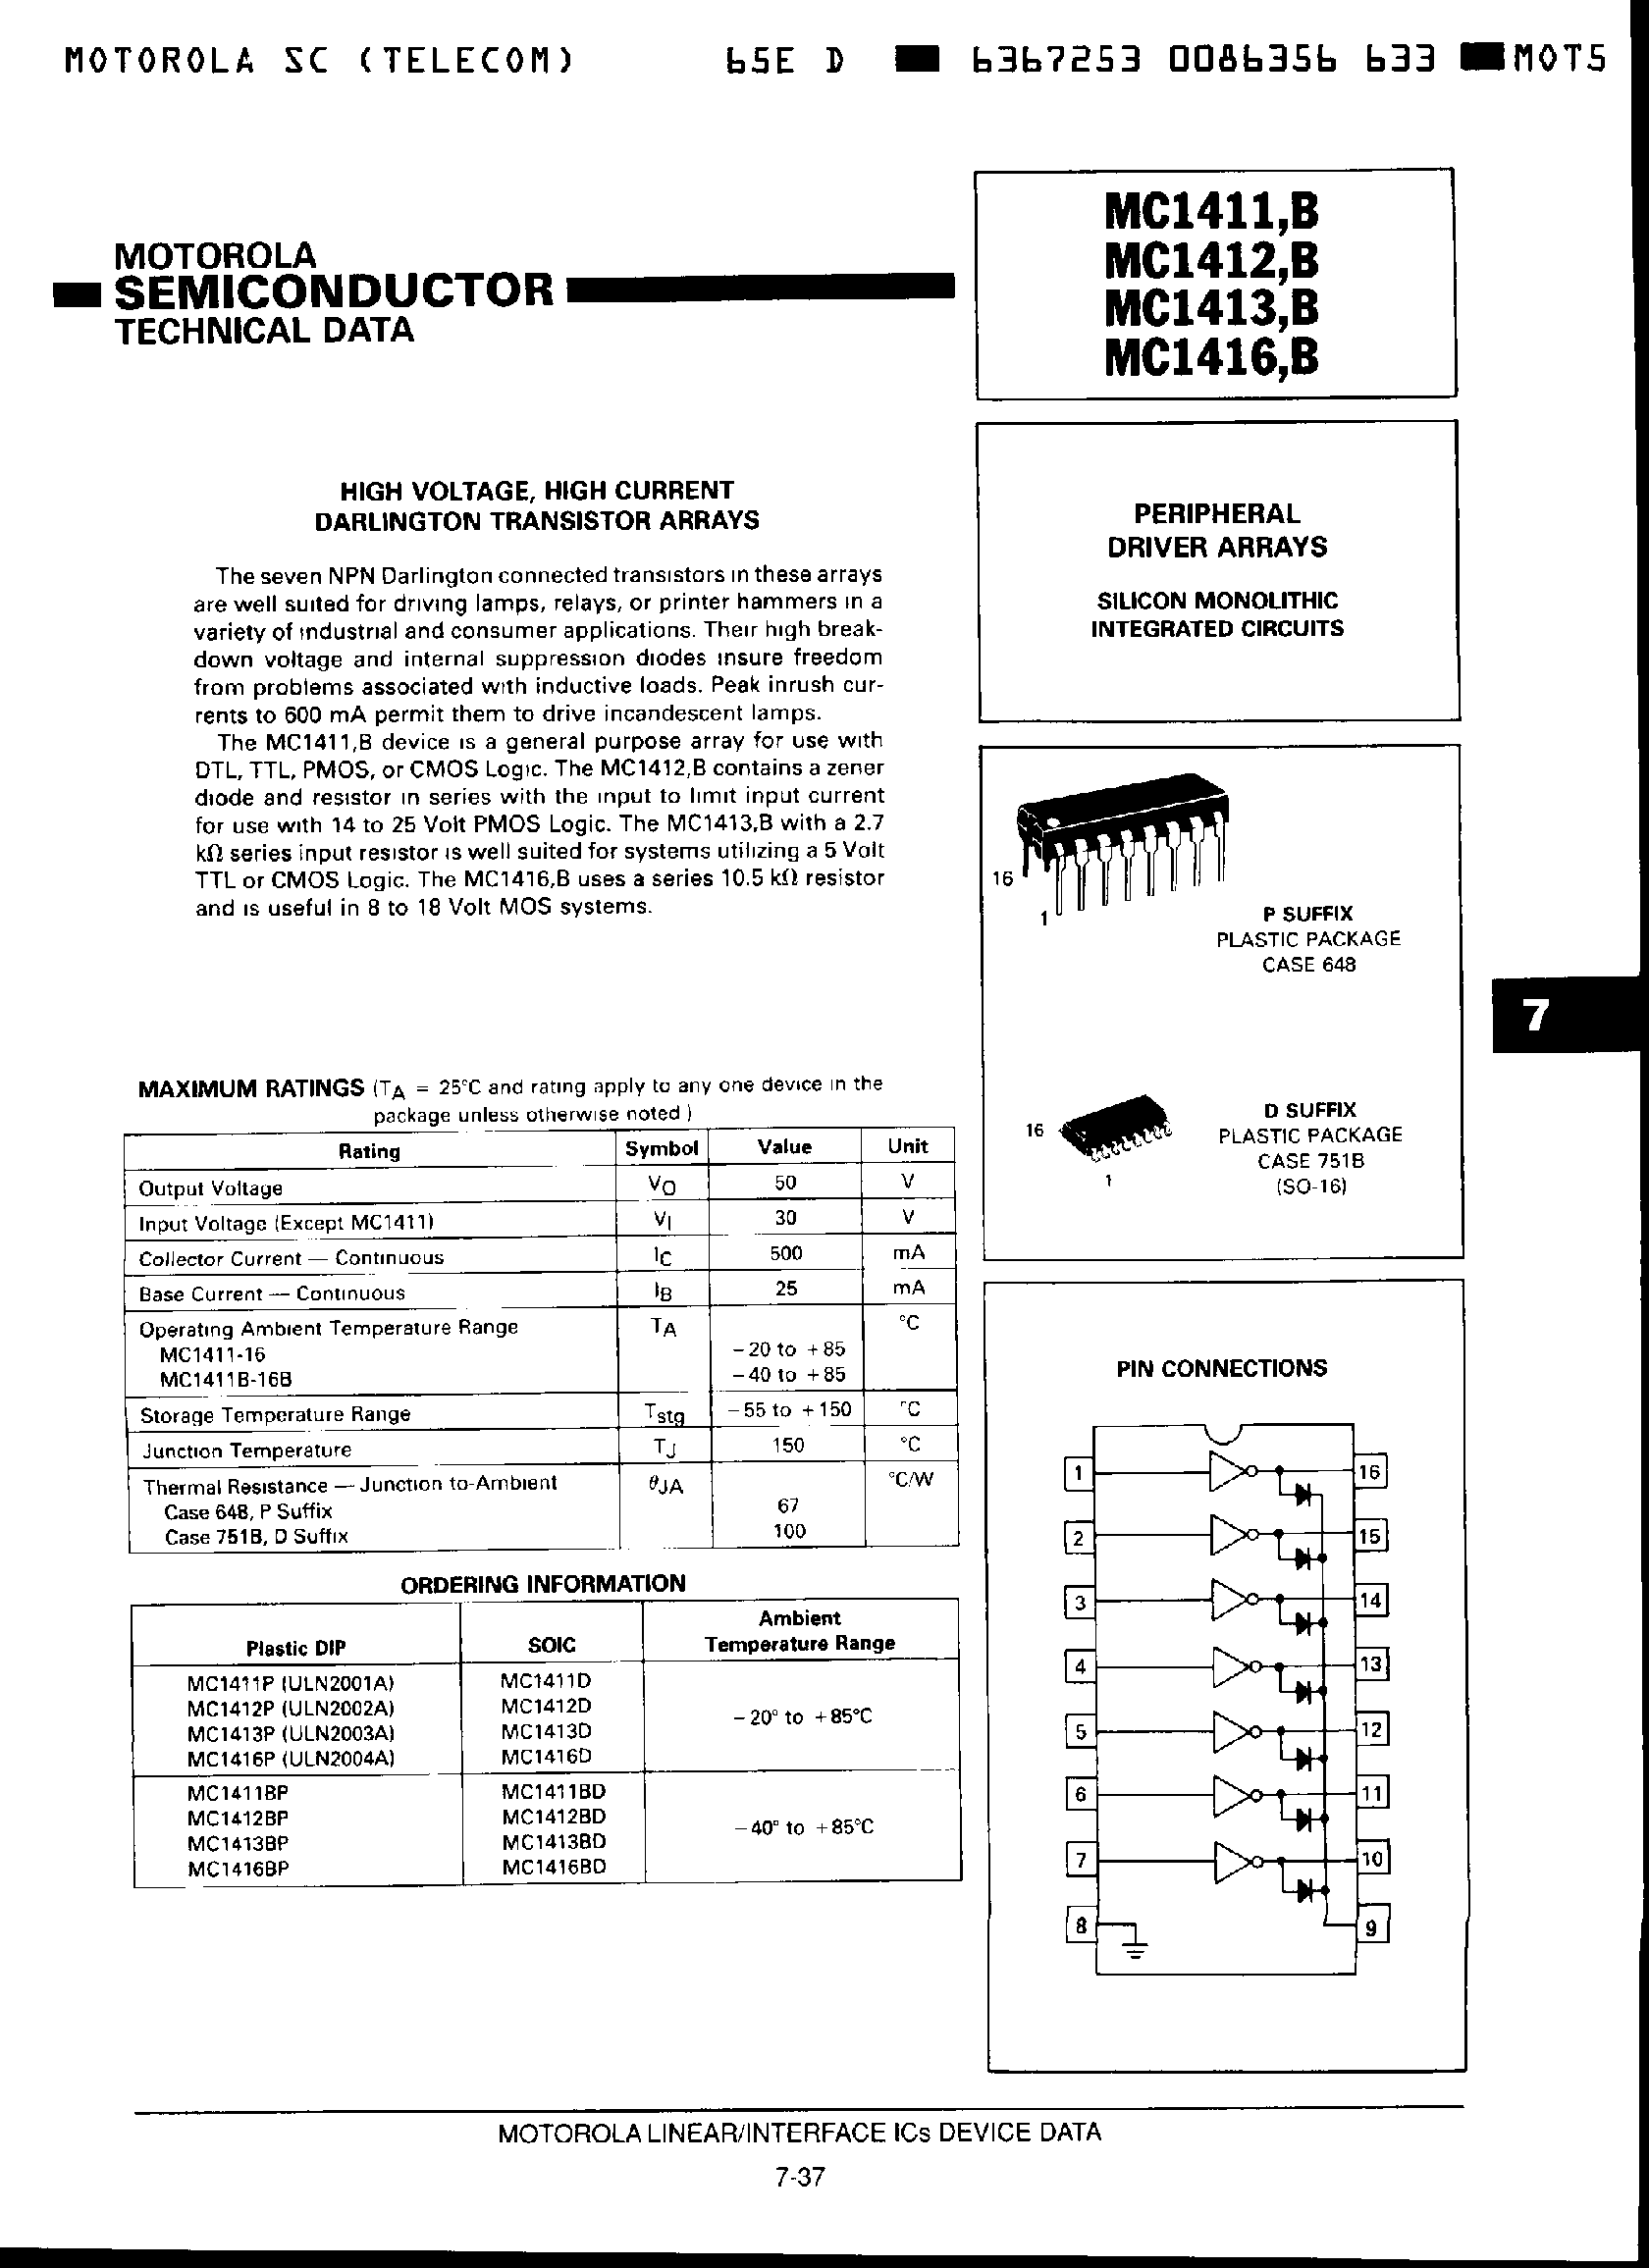 Datasheet MC1413BP - PERIPHERAL DRIVER ARRAYS page 1